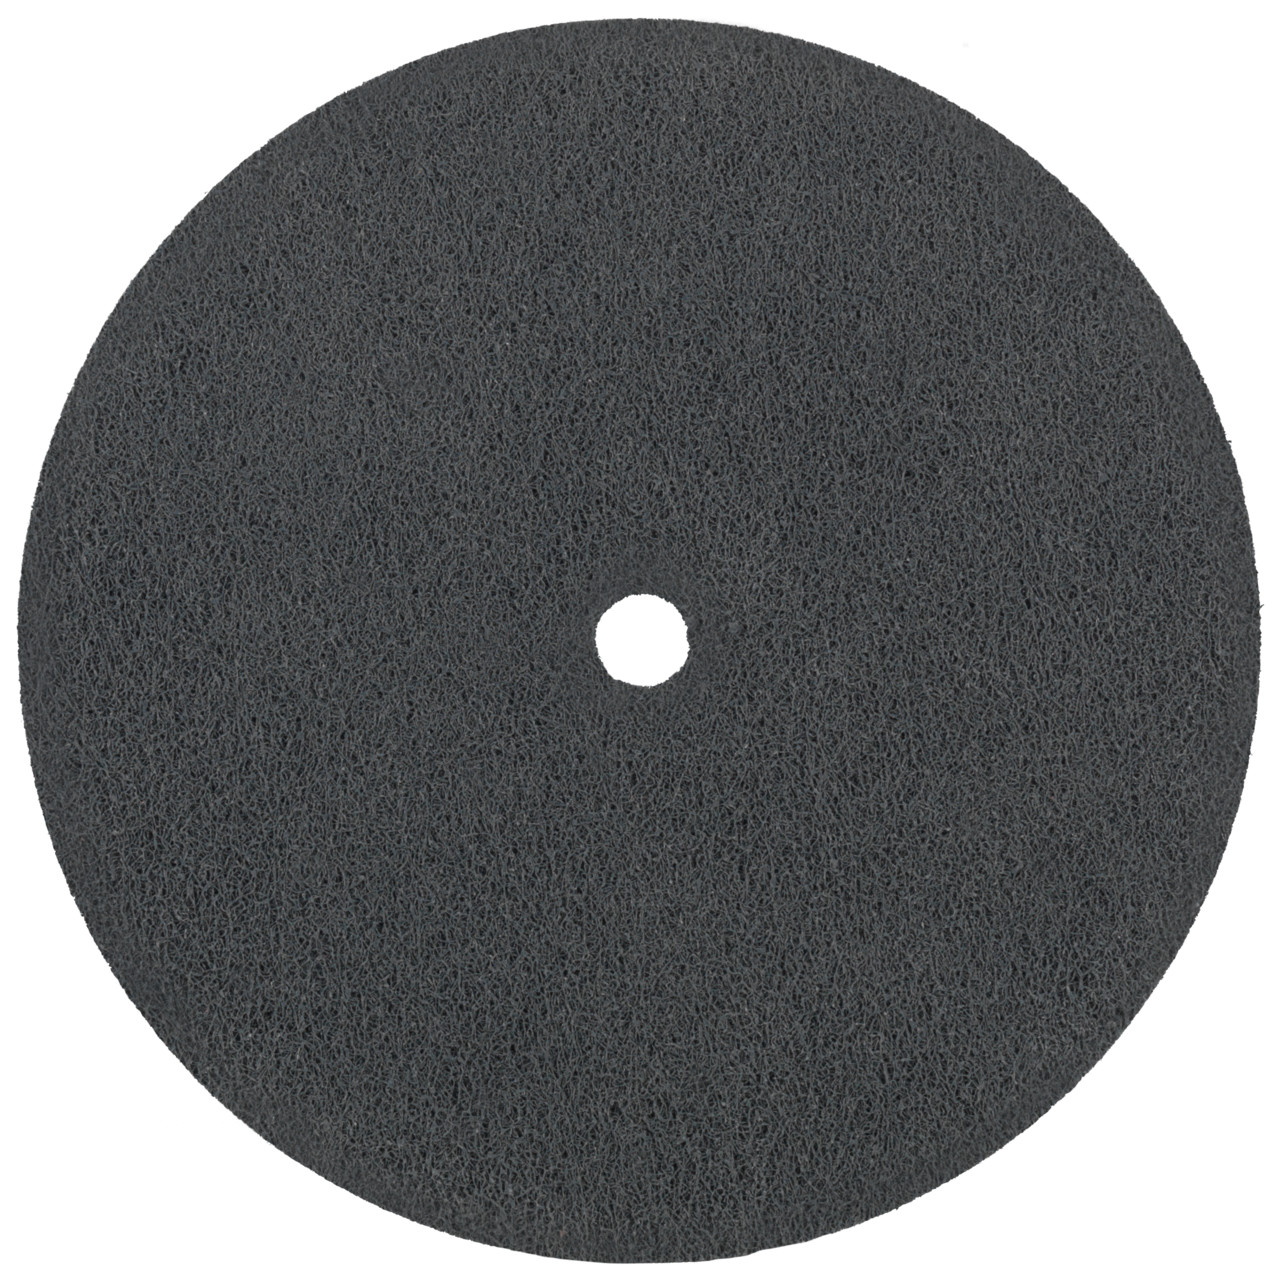 Tyrolit Pressed compact discs DxDxH 152x25x12.7 Universal insert, 6 C FEIN, shape: 1, Art. 34190302